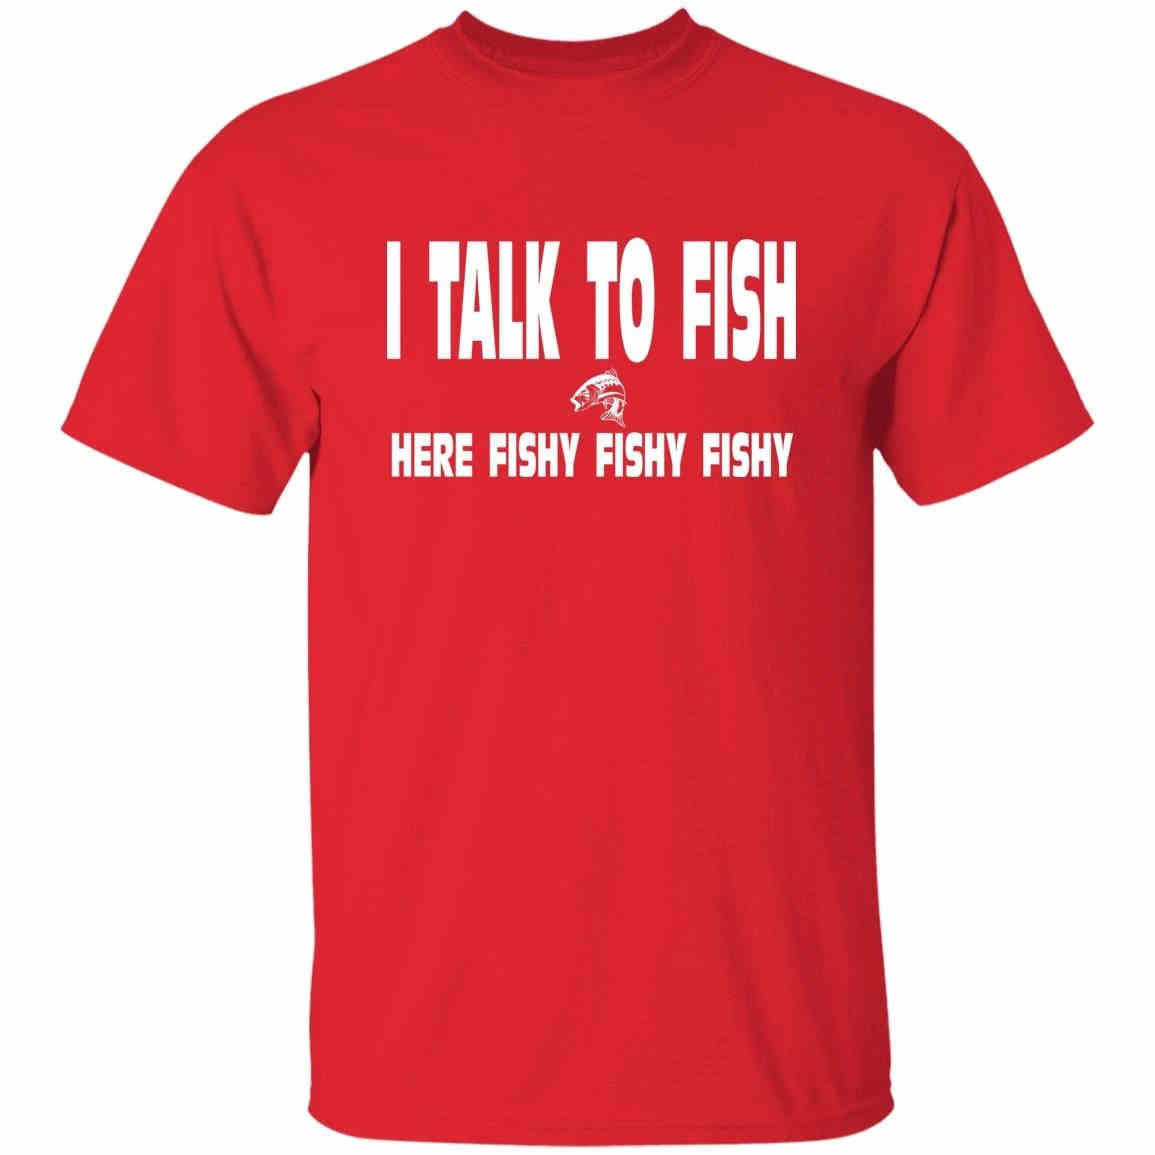 I Talk To Fish Here Fishy Fishy t-shirt red